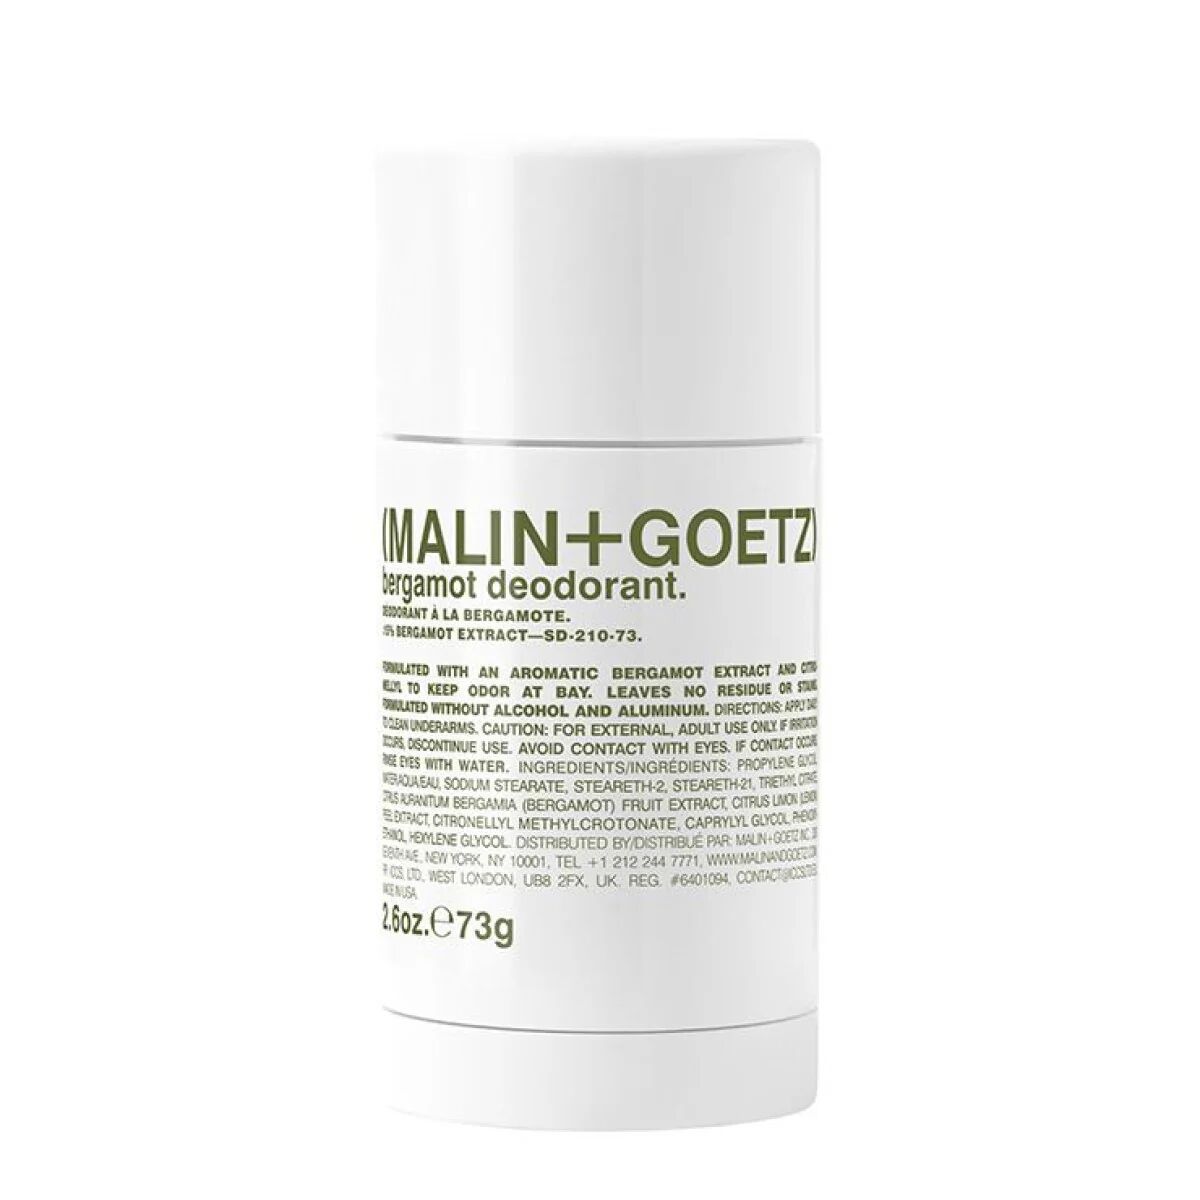 MALIN+GOETZ Bergamot Deodorant (2.6 oz) #10083396